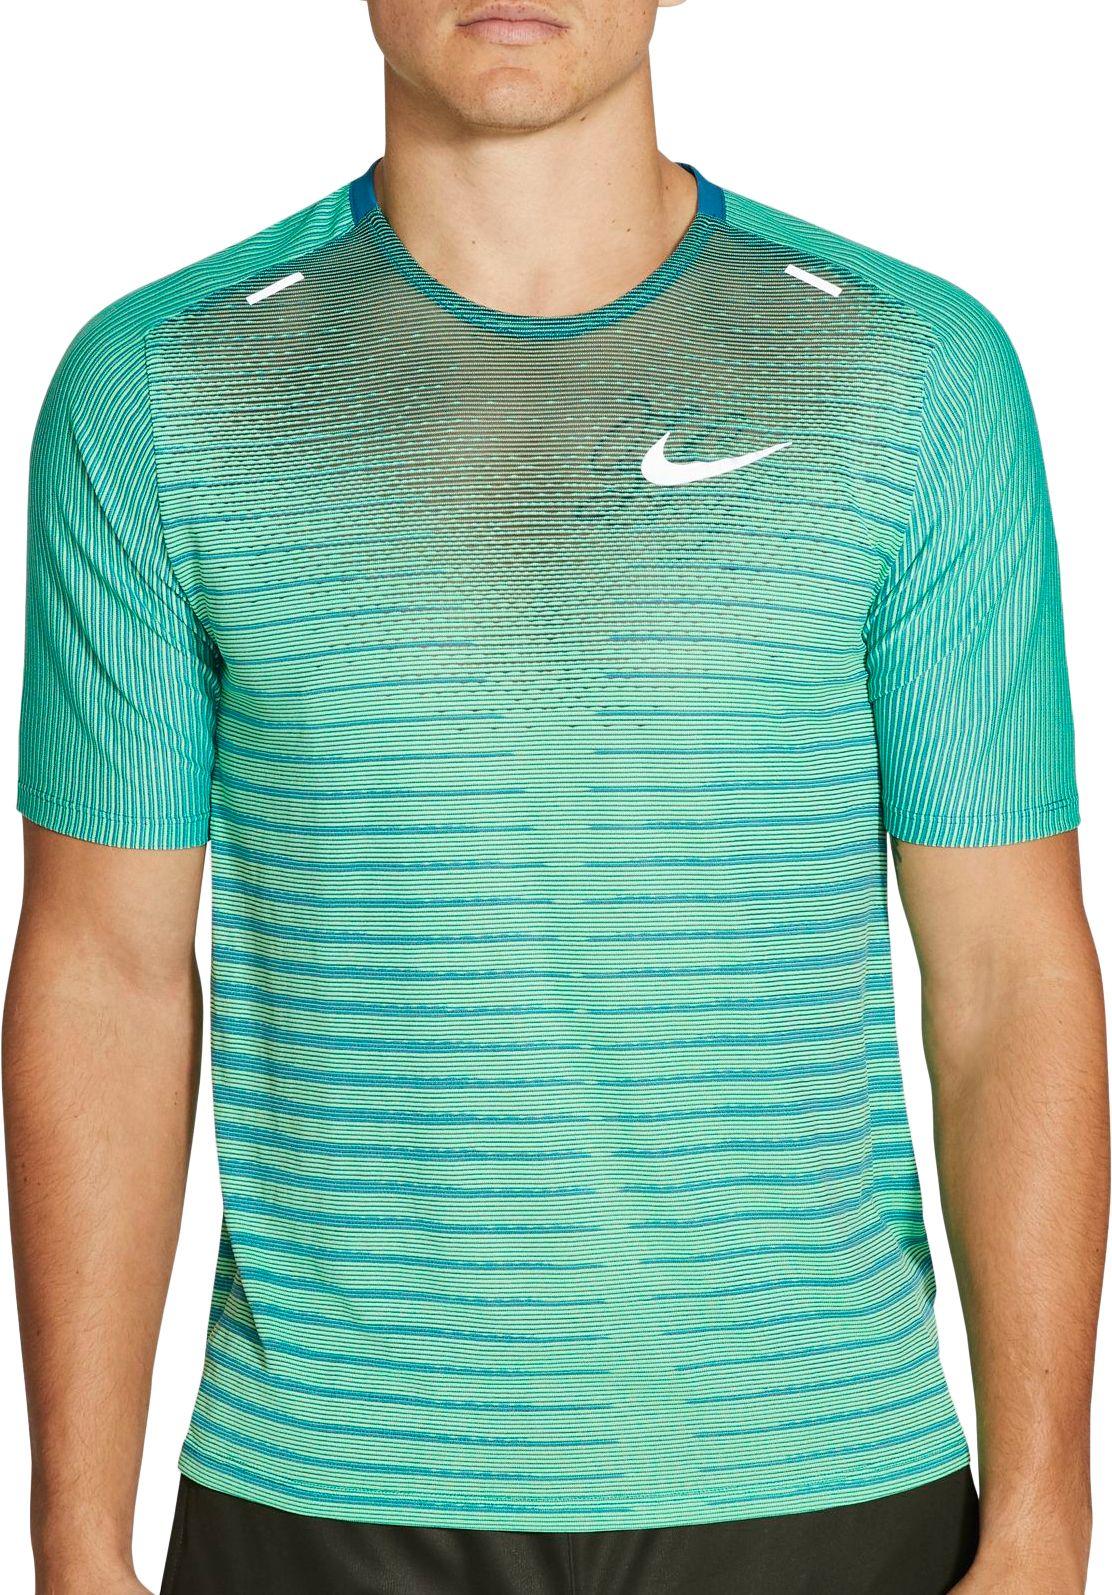 Nike Techknit Future Fast Running T-shirt for Men - Lyst